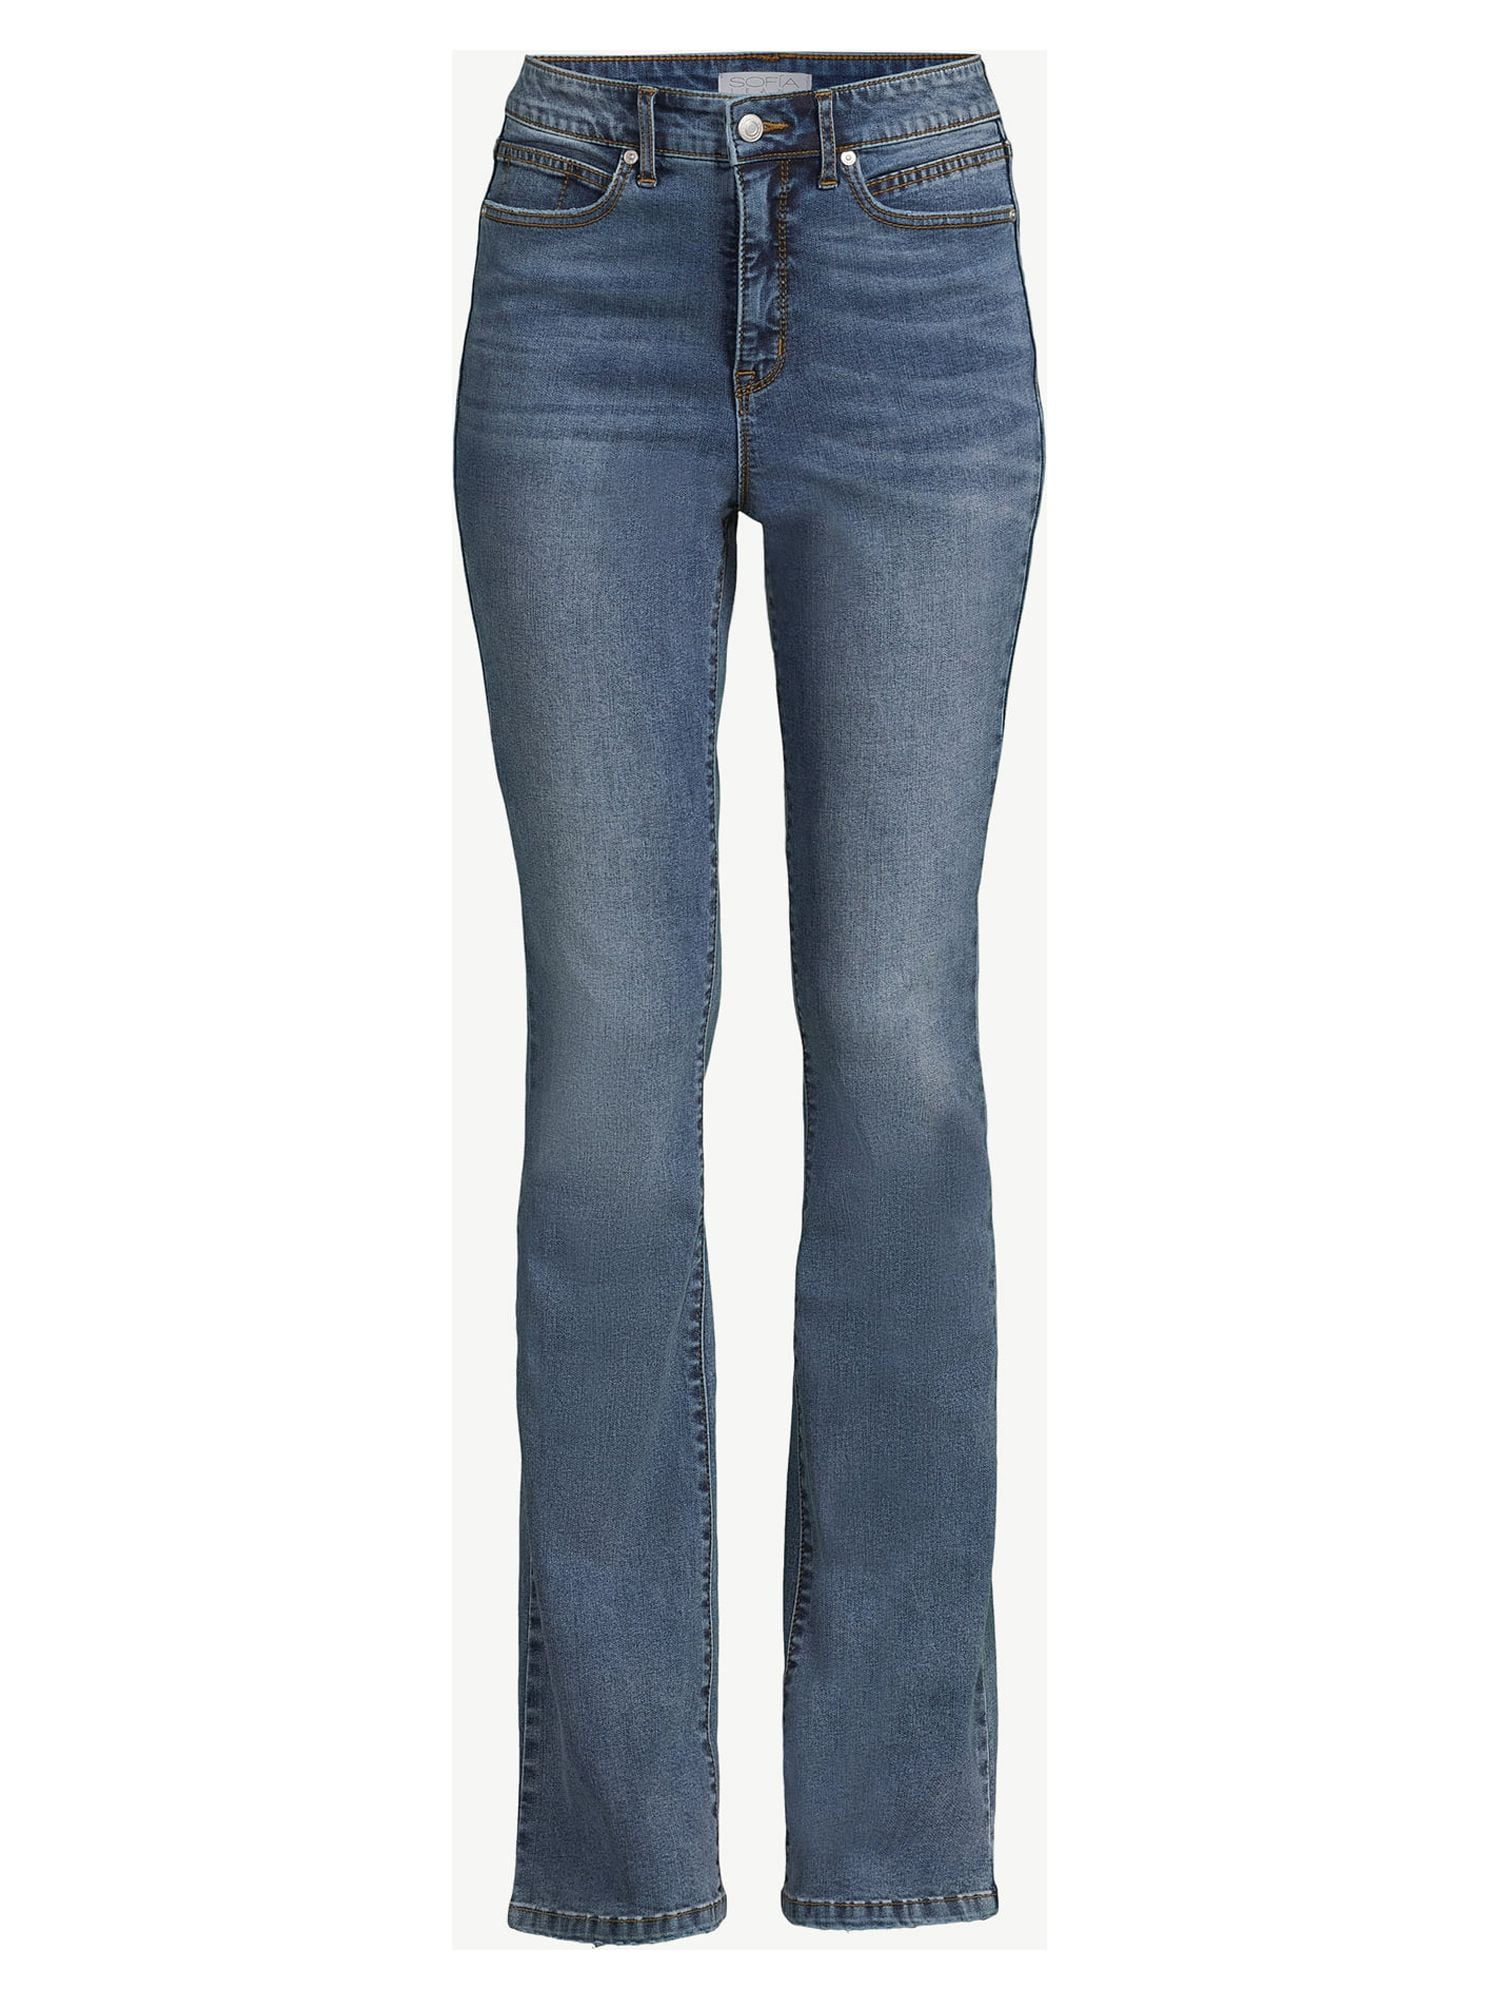 Sofia Jeans Women\'s Marisol Curvy Bootcut Super High Rise Jeans